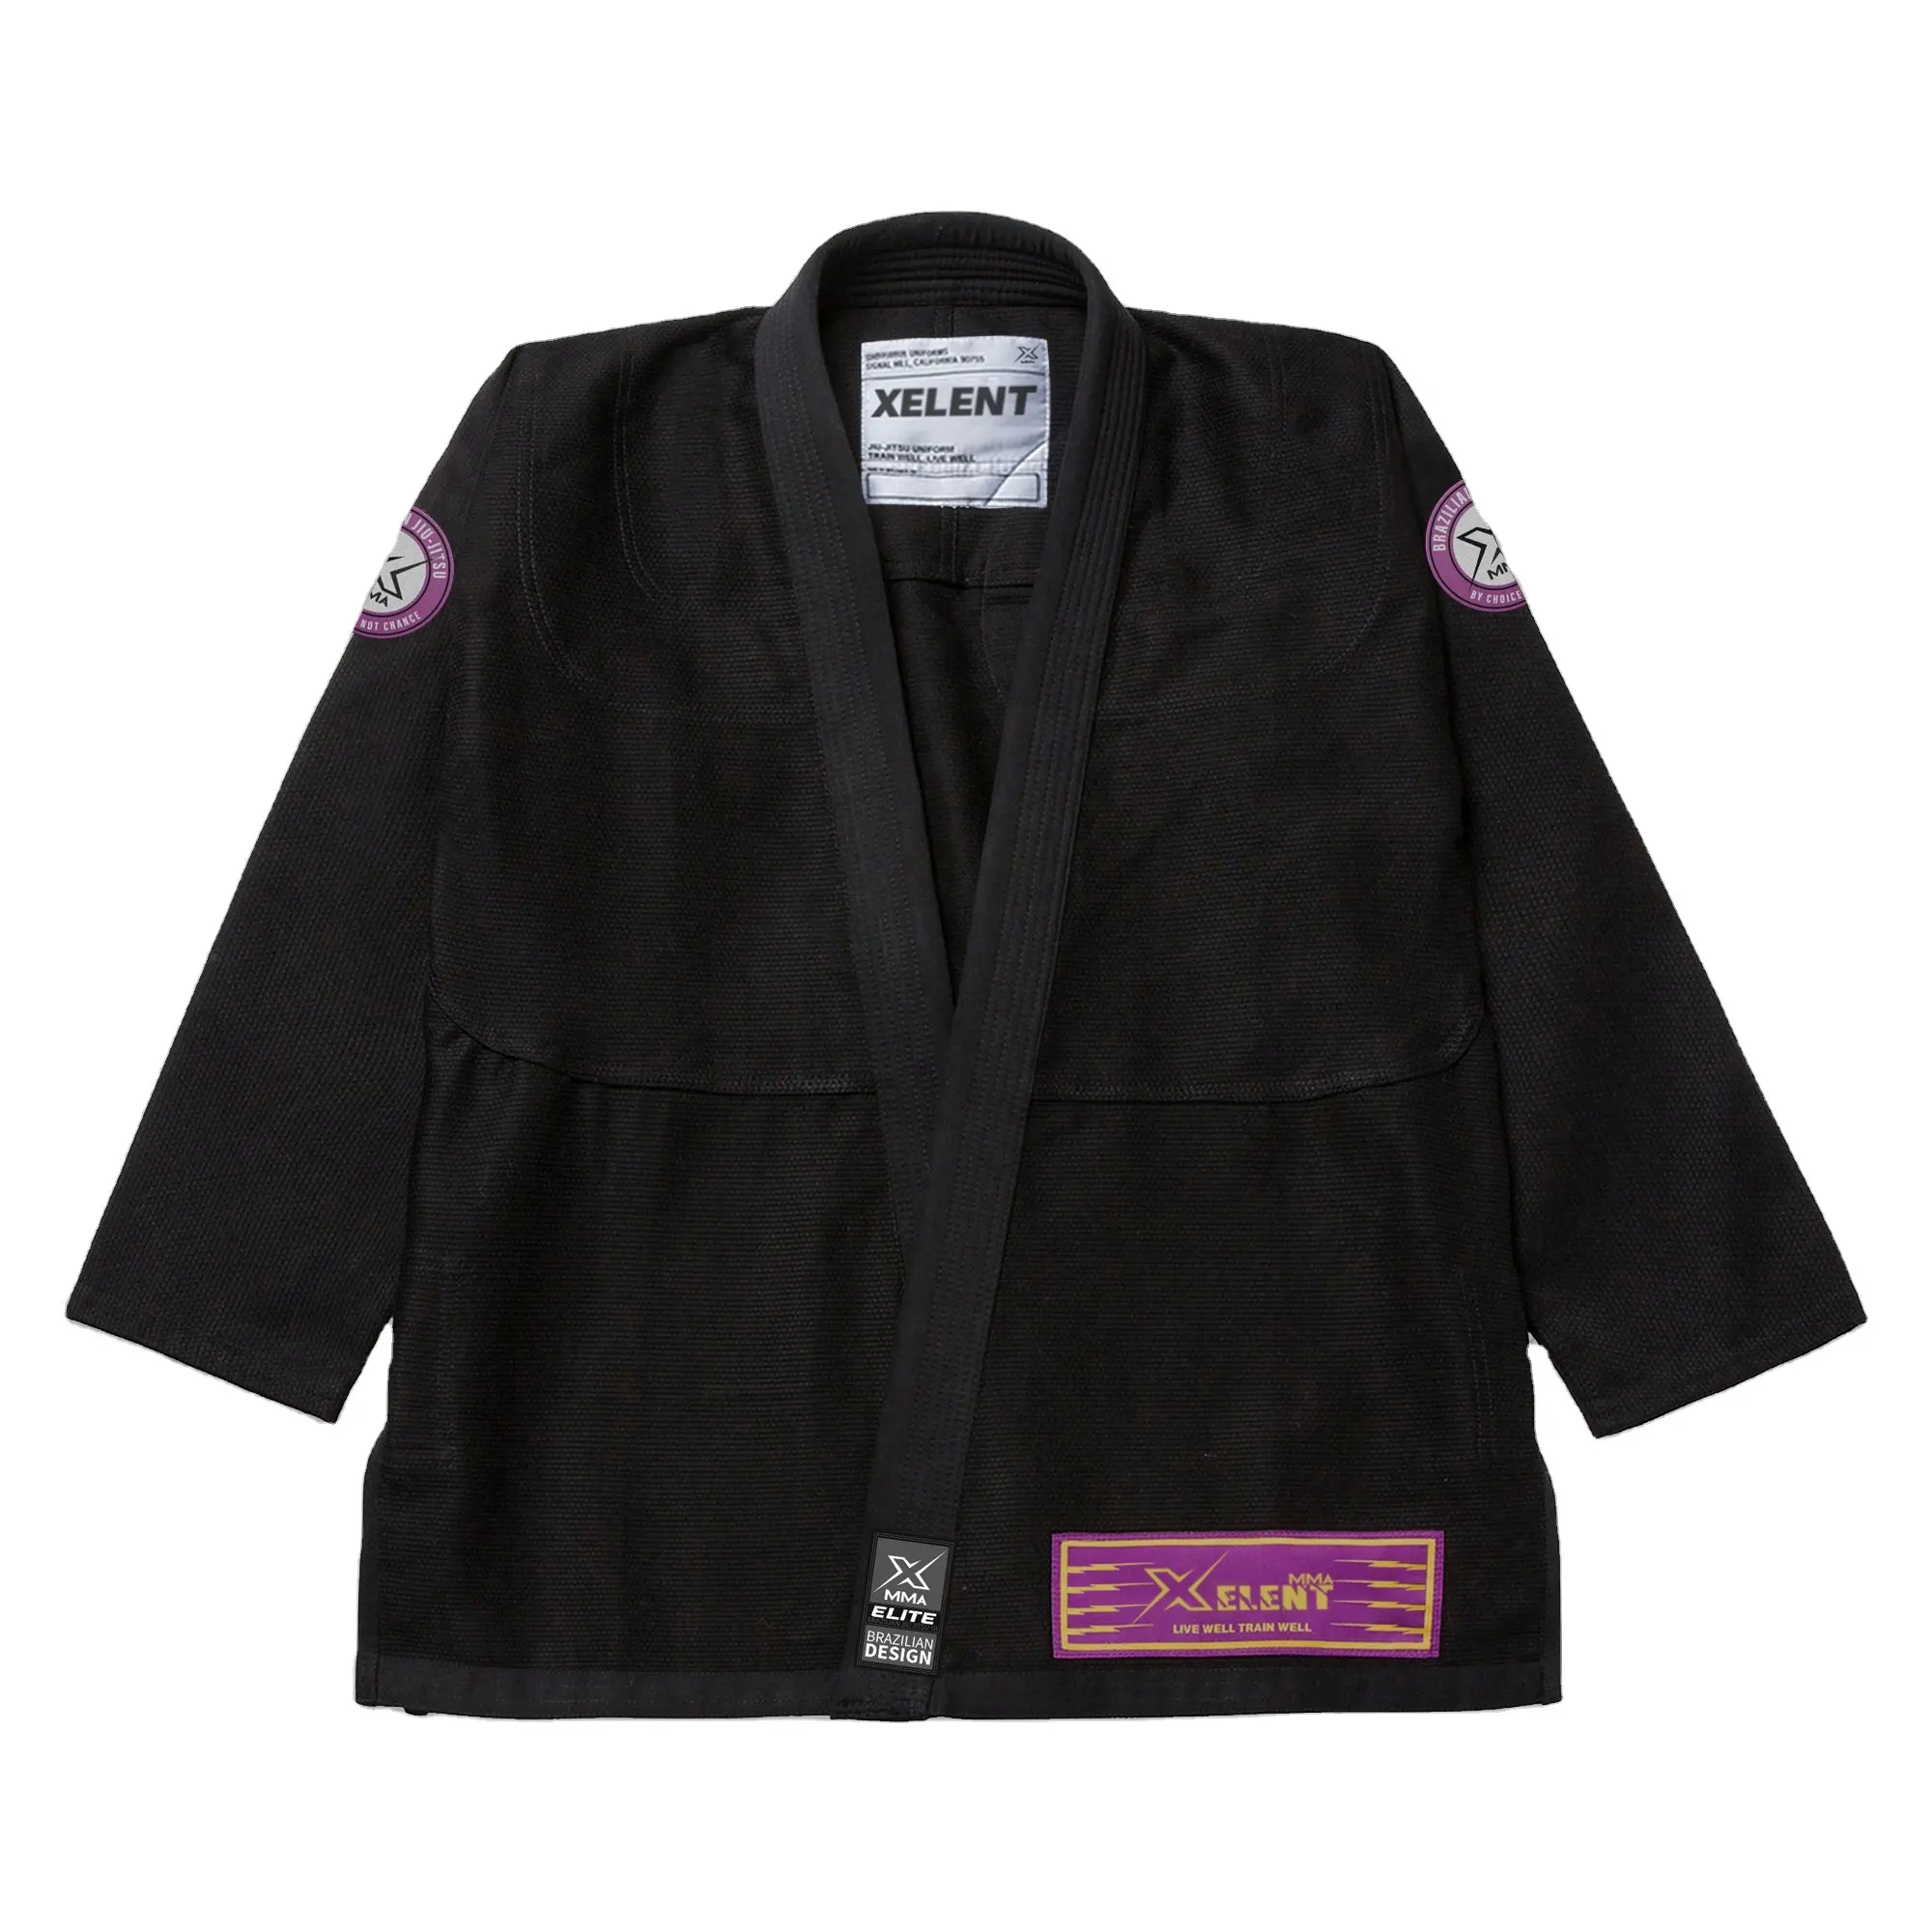 Jiu Jitsu อุปกรณ์ MMA สวมใส่โลโก้ที่กําหนดเองชุดกีฬา / Jitsu Gi ราคาถูก Gi / Custom Gi BJJ กิโมโนยูนิเซ็กซ์ยูโด